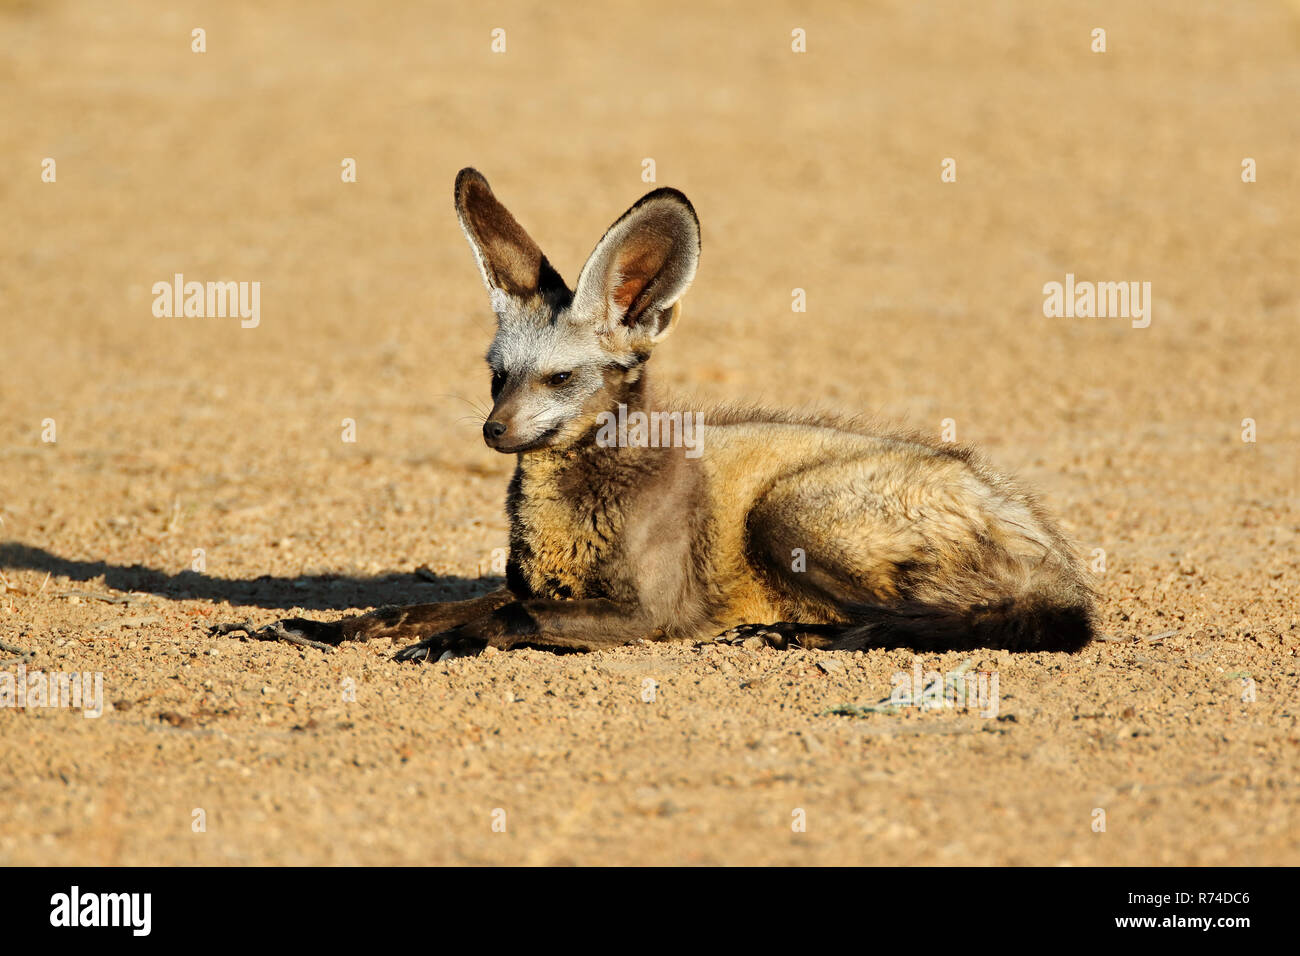 Bat-eared fox in natural habitat Stock Photo